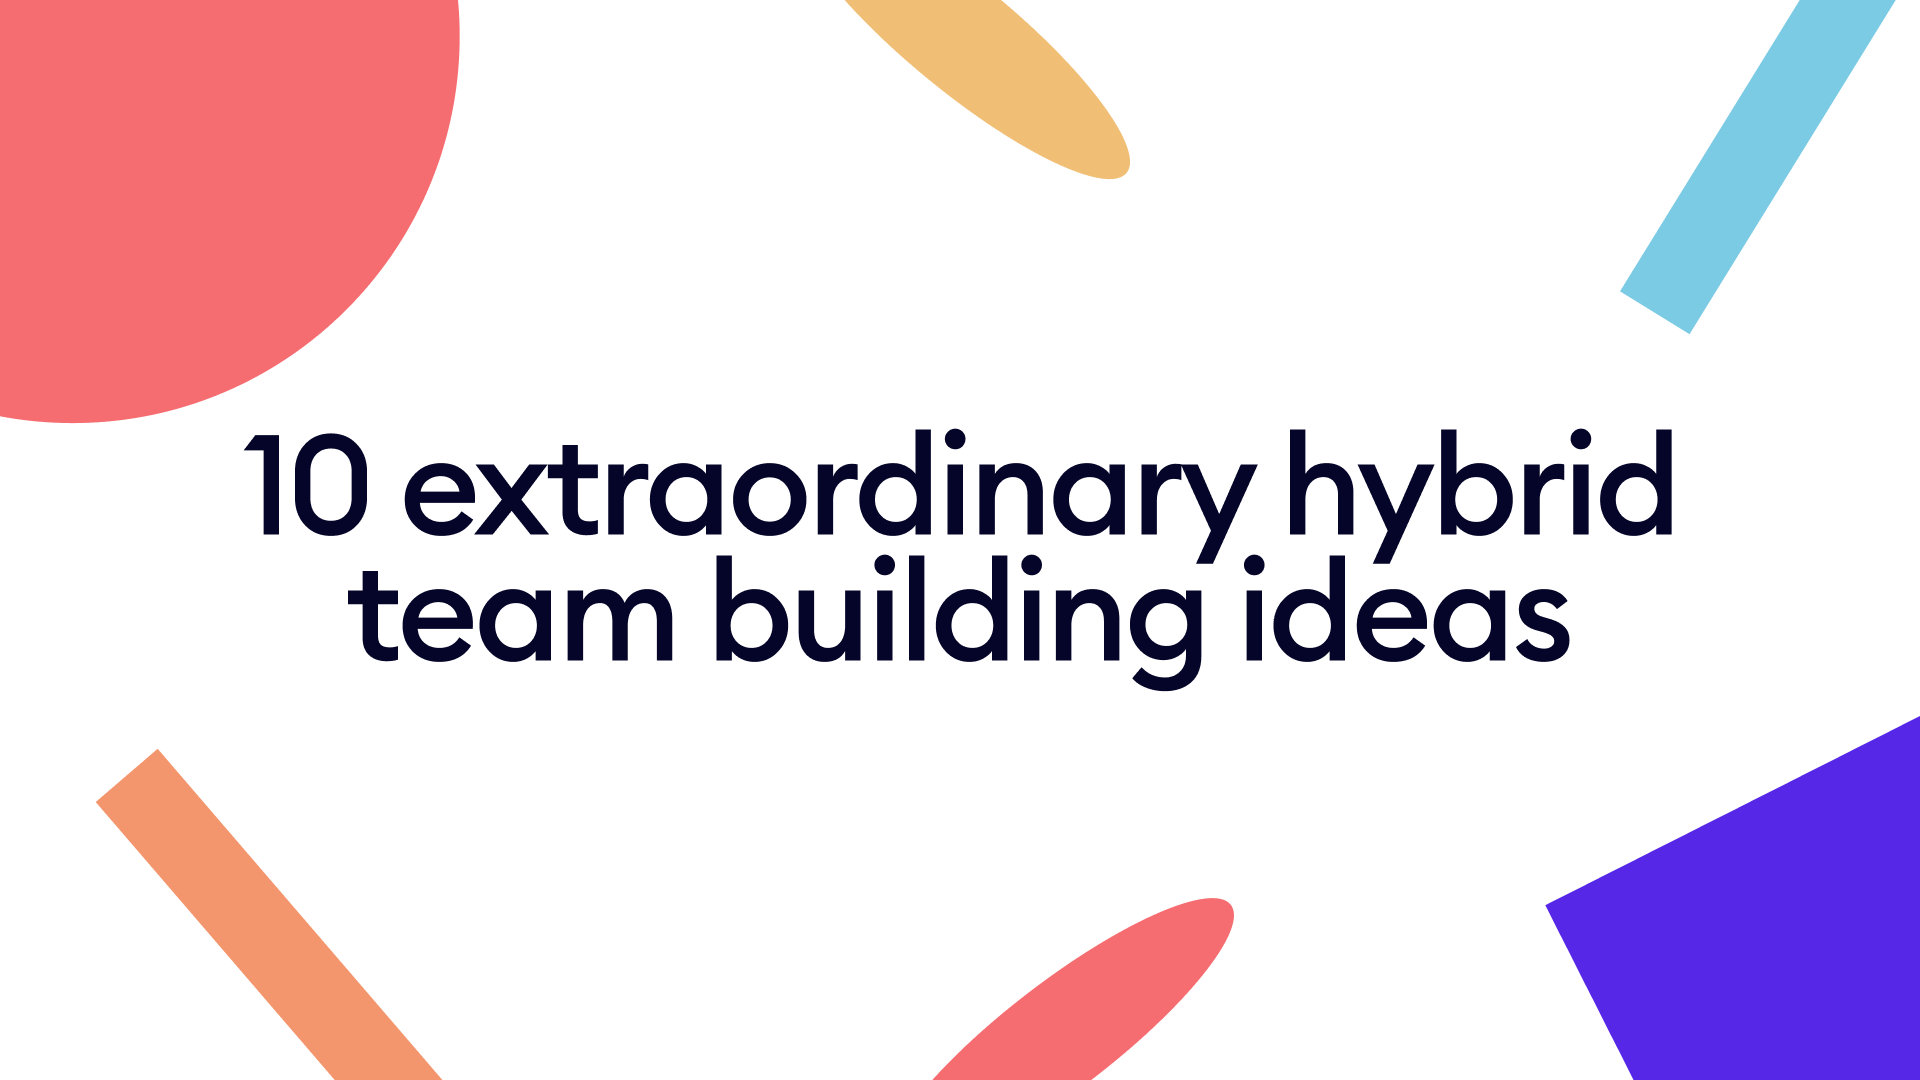 10 extraordinary hybrid team building ideas